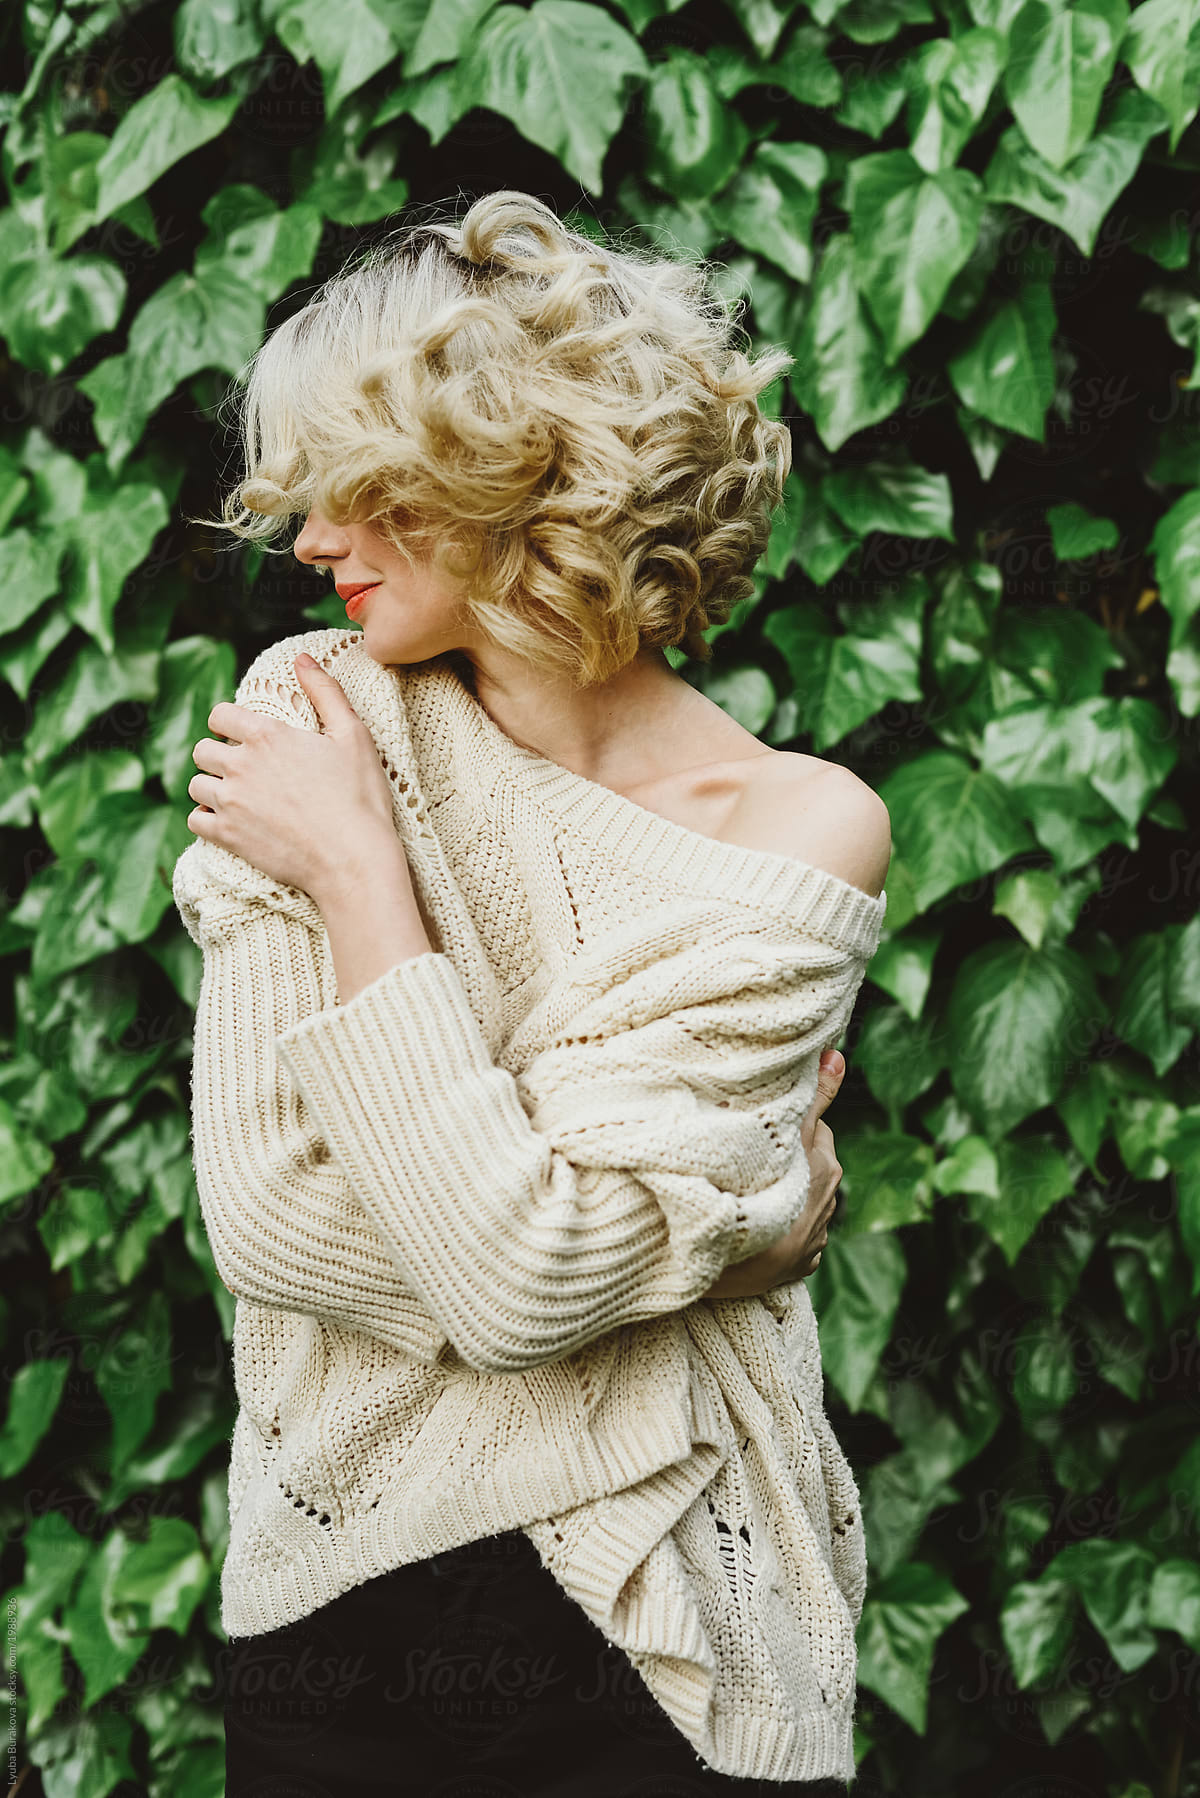 Blonde Woman Outdoors By Stocksy Contributor Amor Burakova Stocksy 